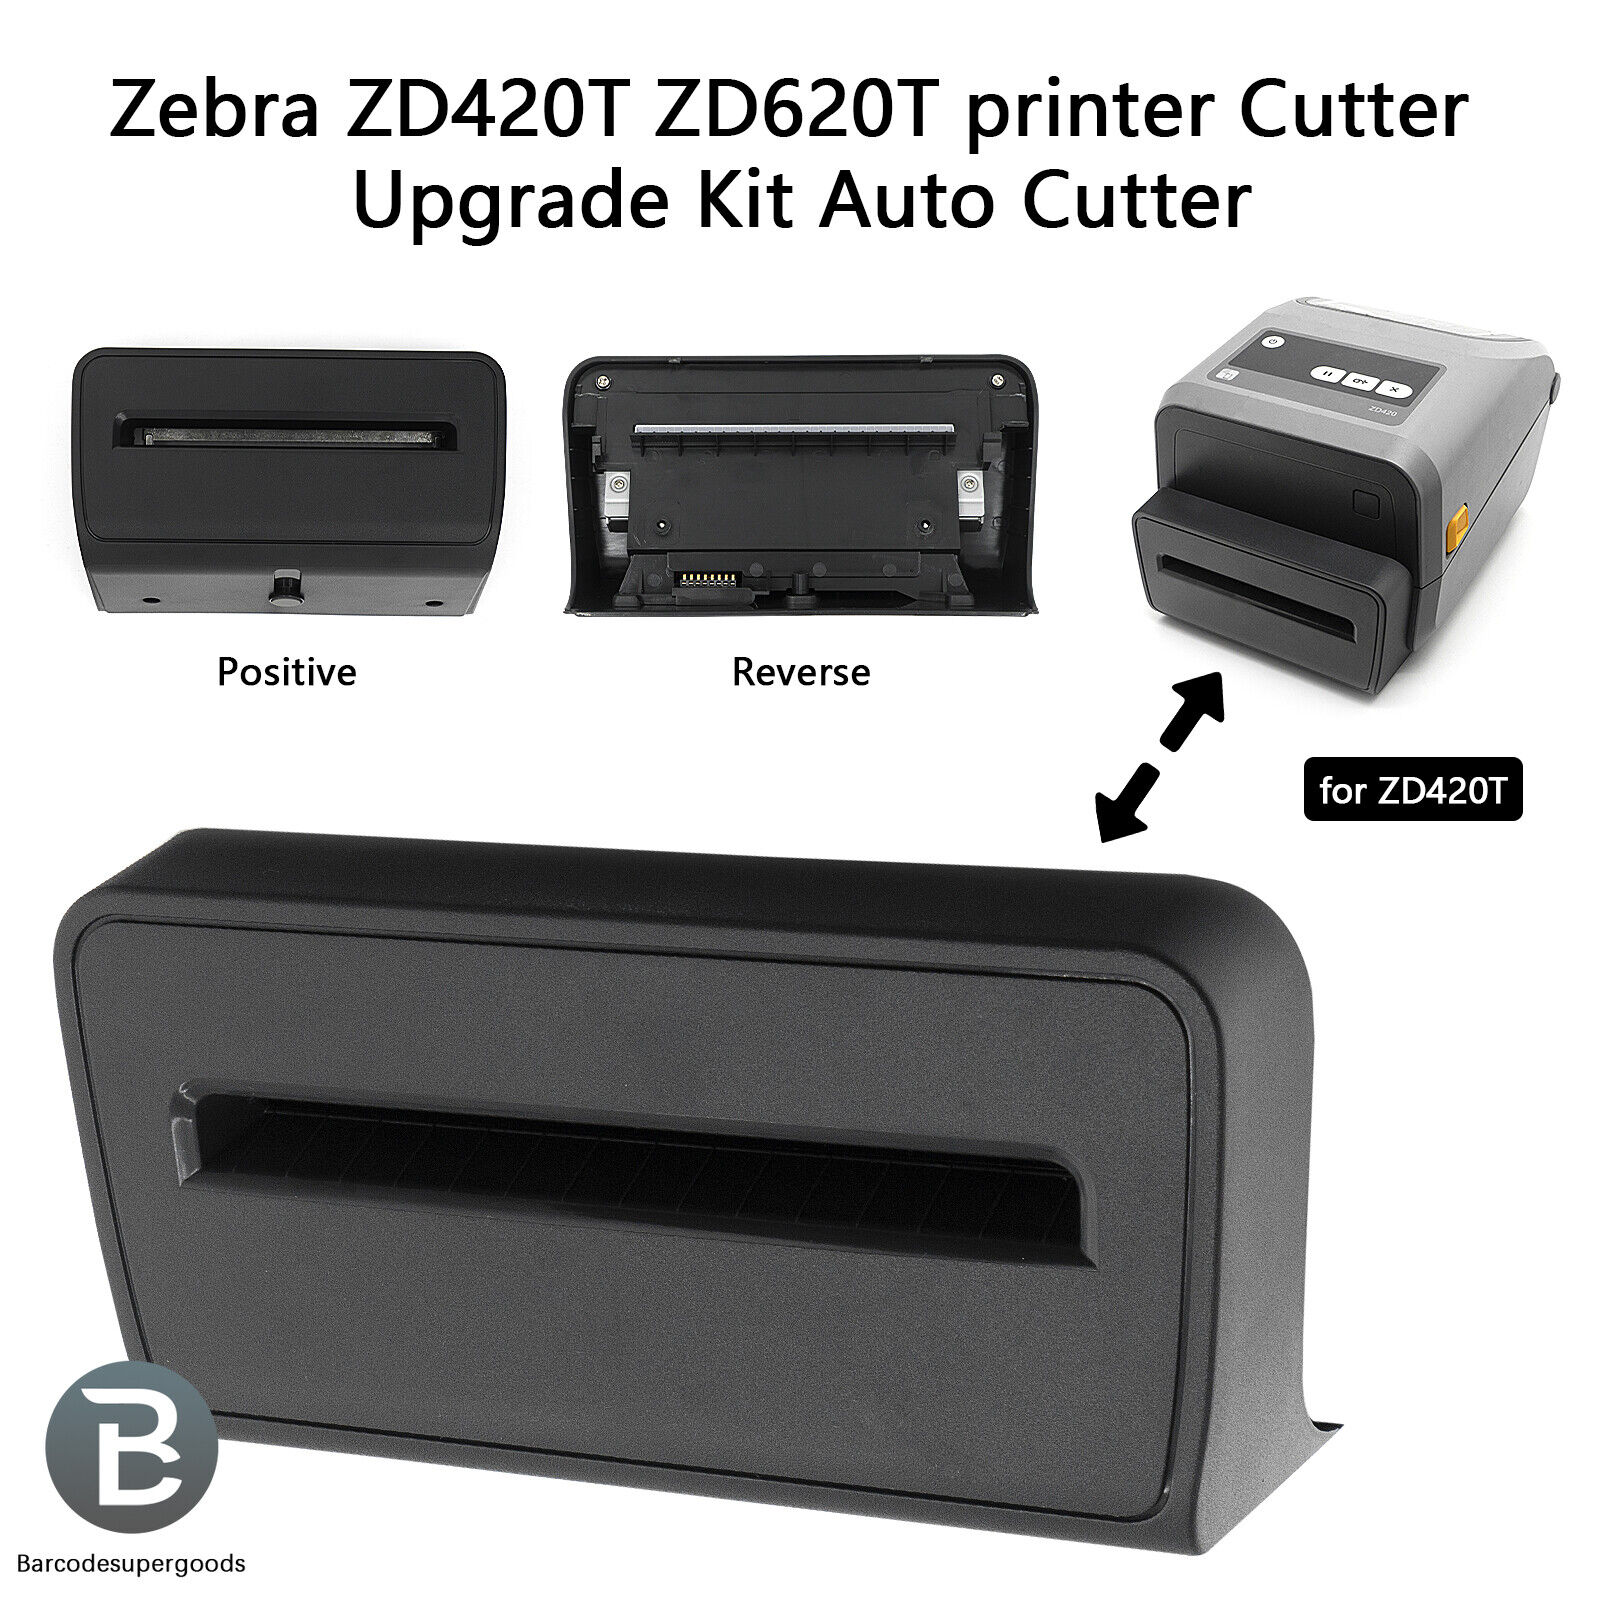 Printer Cutter Upgrade Kit Auto Cutter for Zebra ZD420T ZD620T New